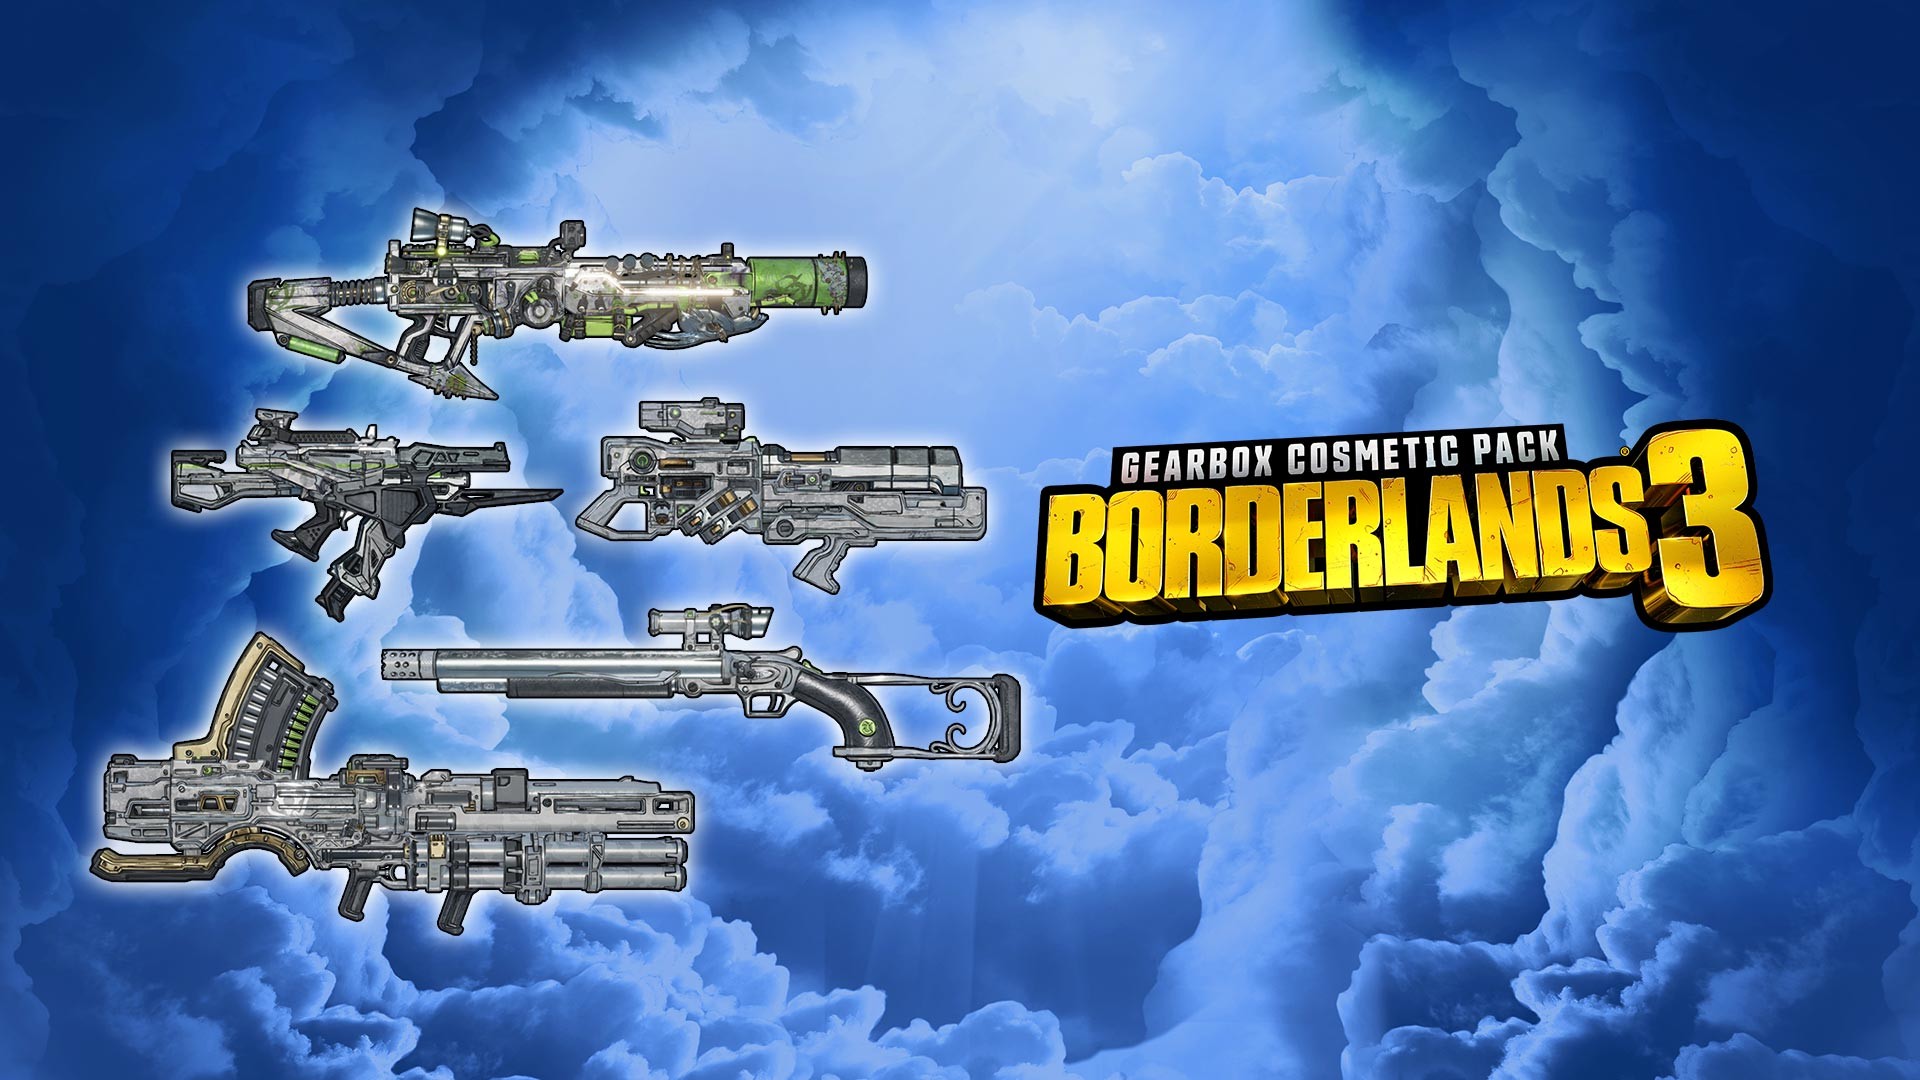 Borderlands 3: Gearbox Cosmetic Pack Featured Screenshot #1